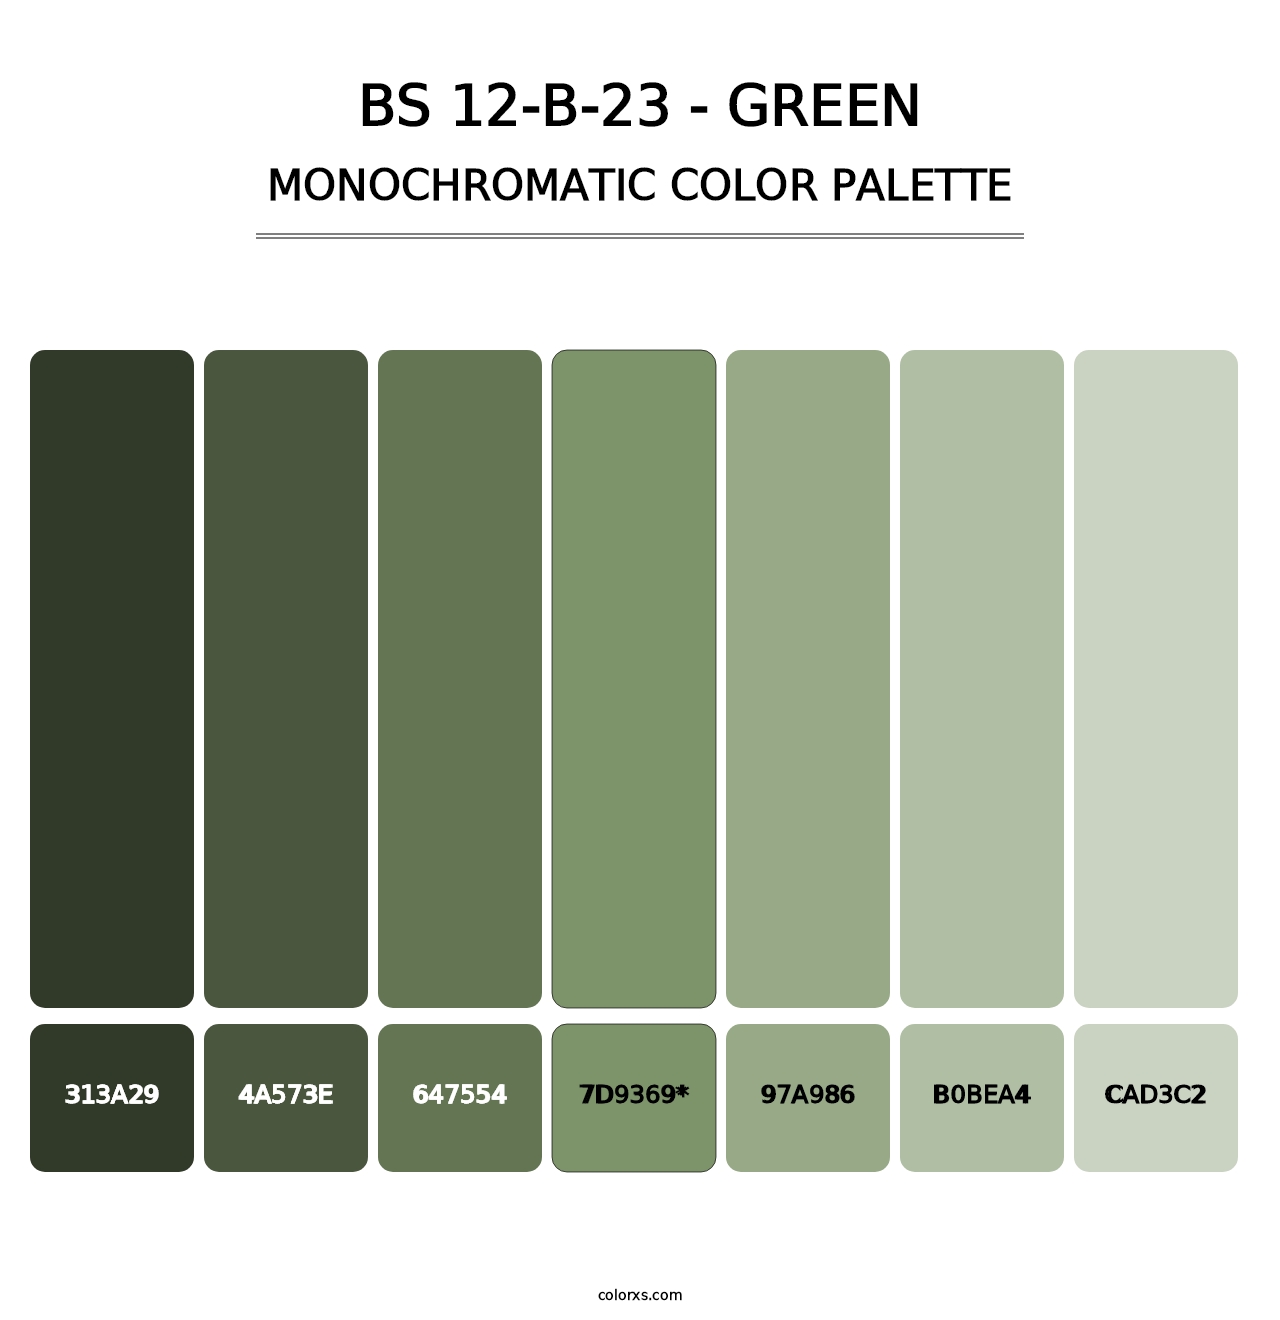 BS 12-B-23 - Green - Monochromatic Color Palette